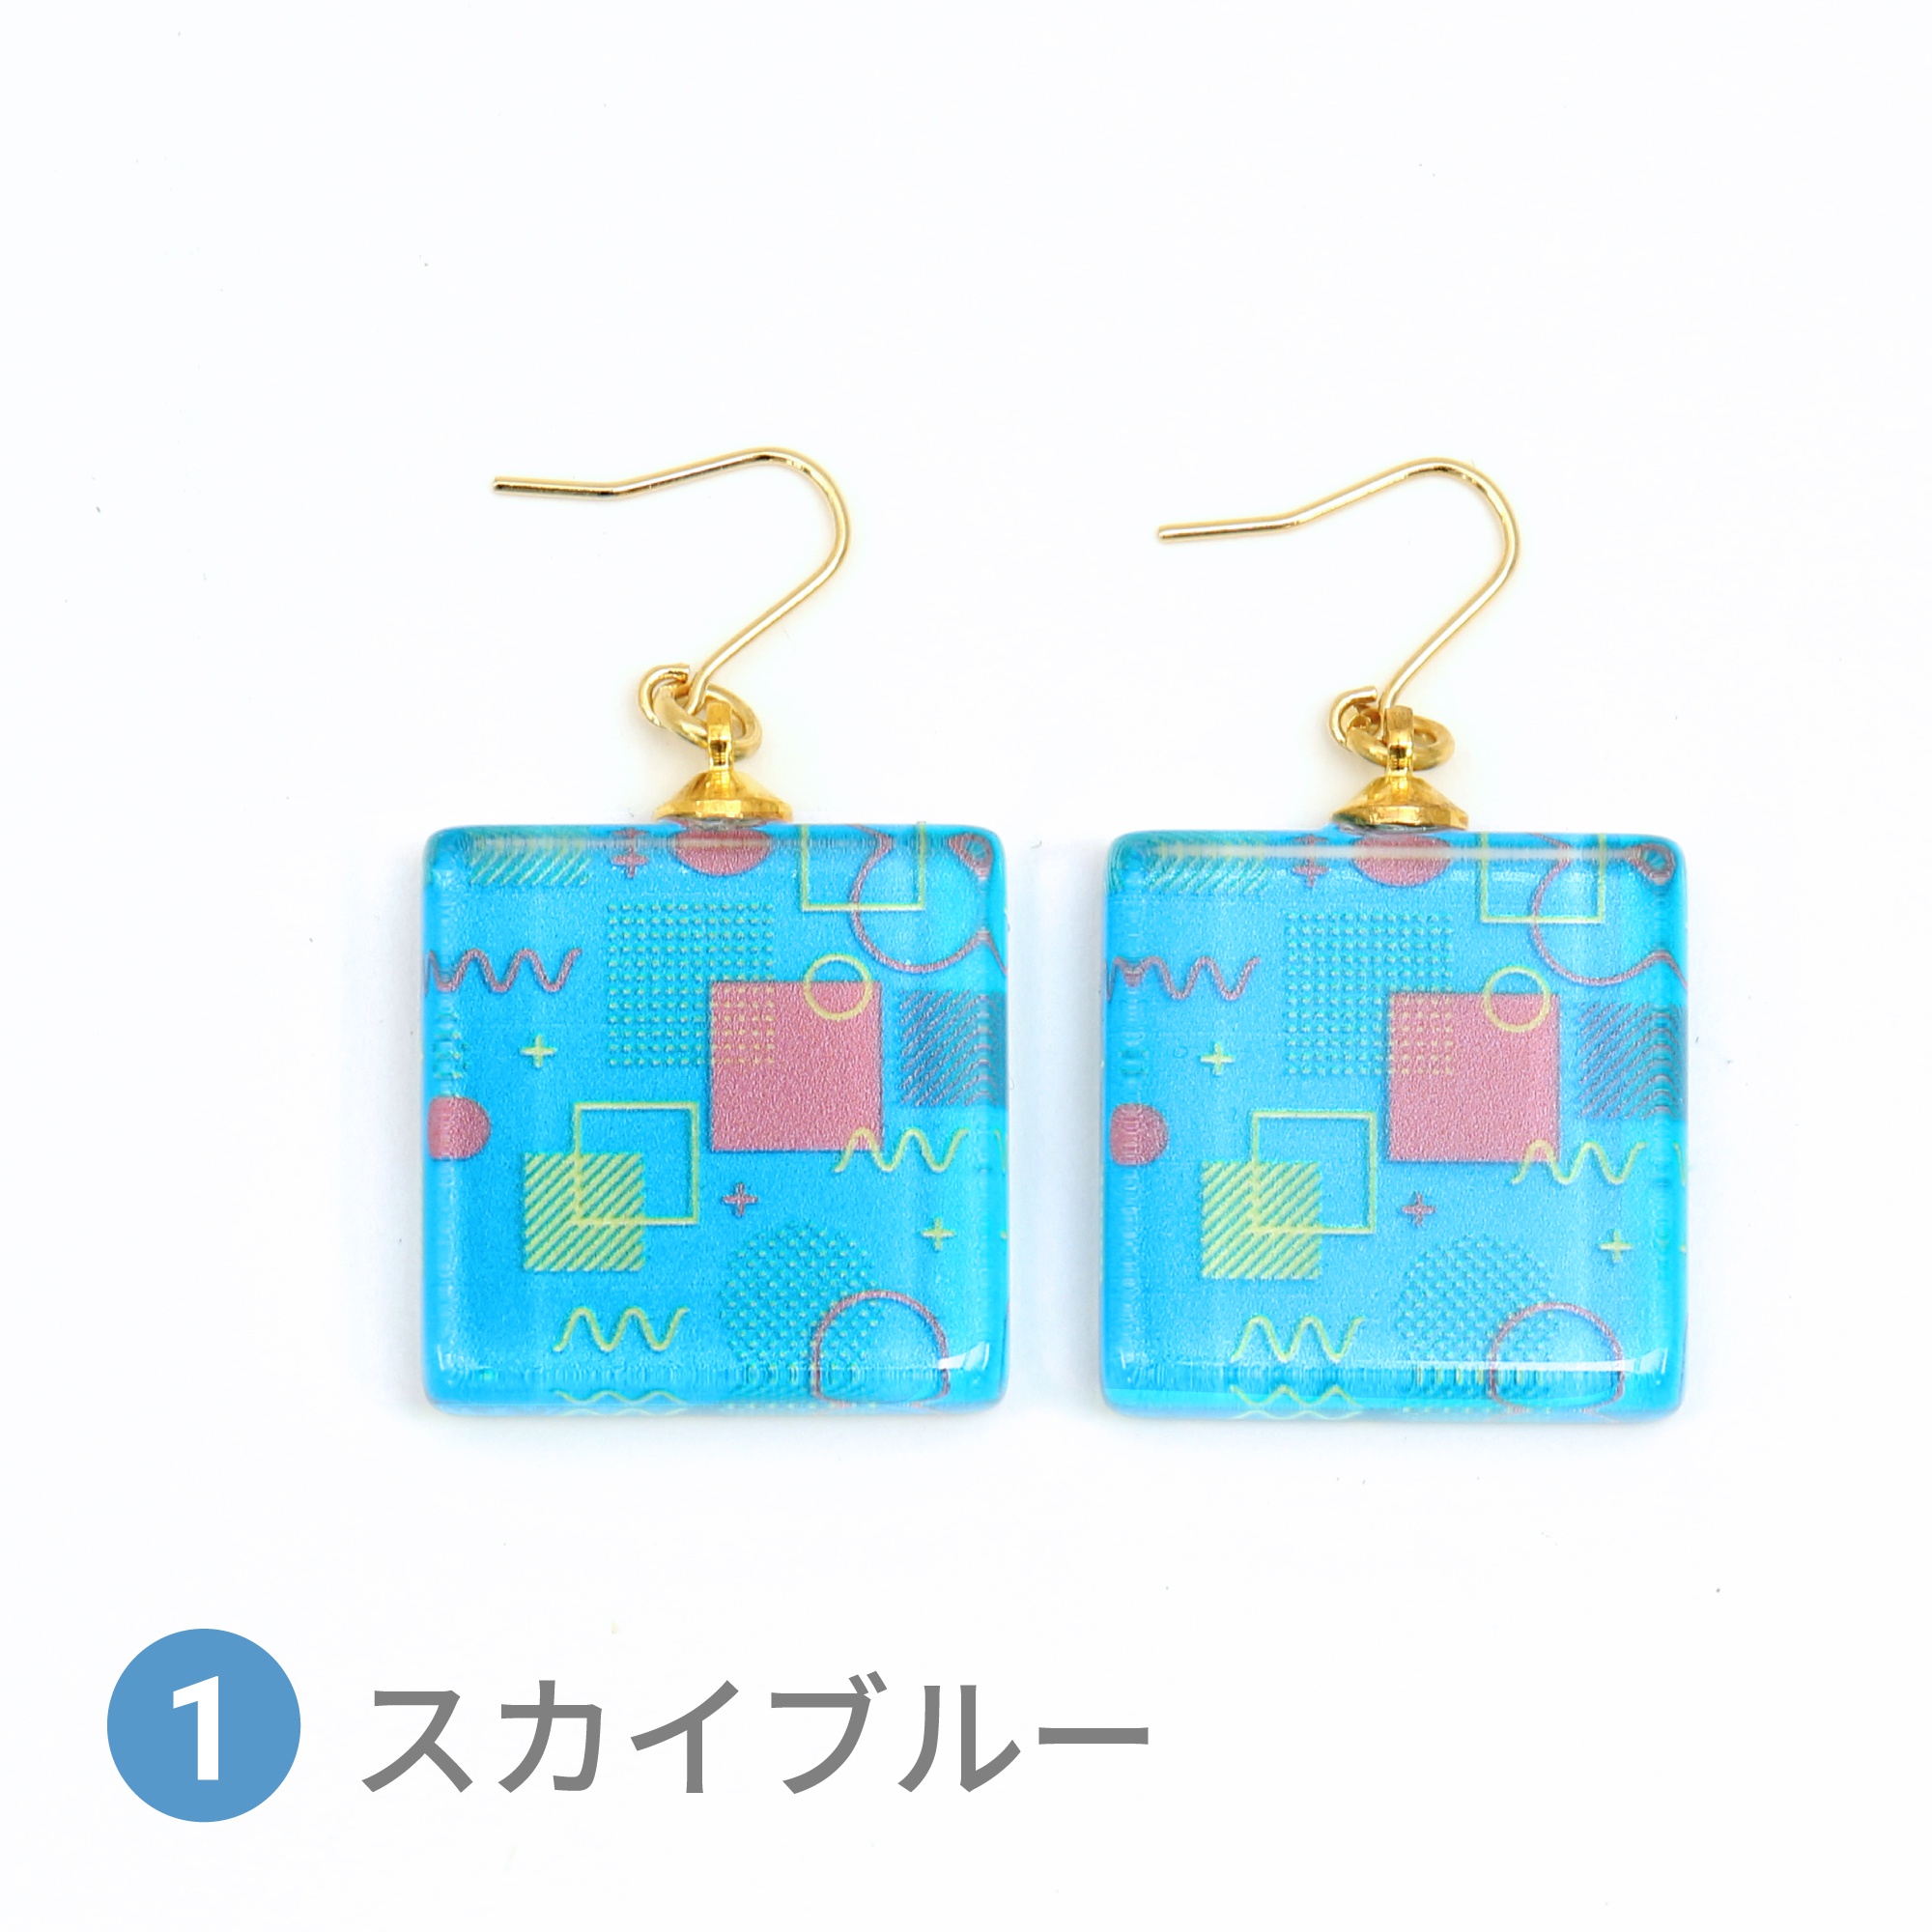 Glass accessories Pierced Earring GEOMETRIC skyblue square shape